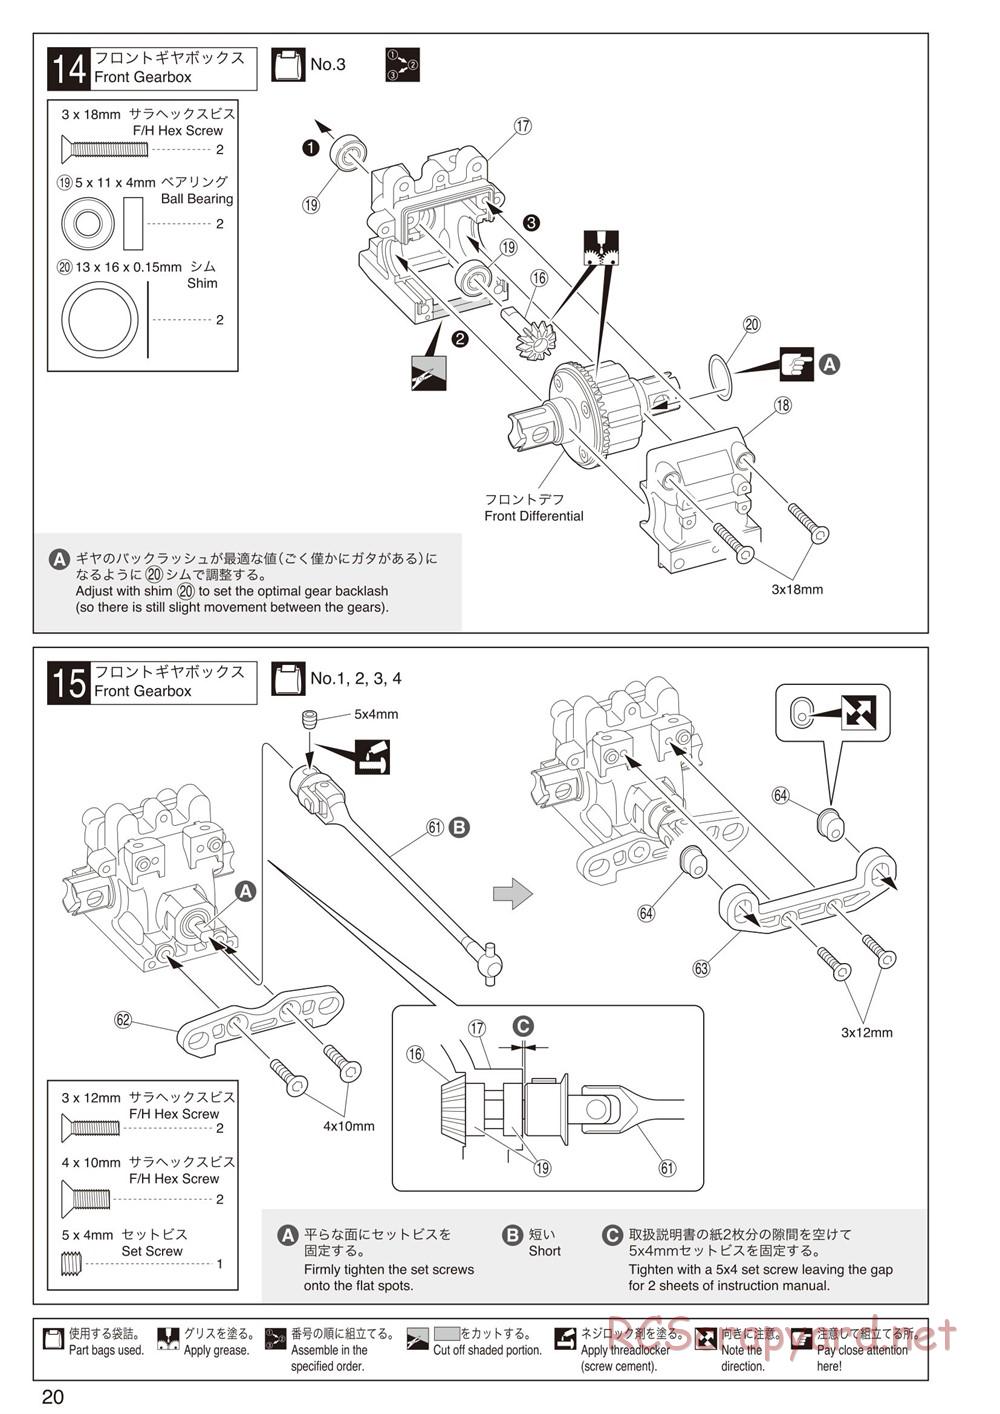 Kyosho - Inferno MP9 TKI4 - Manual - Page 20